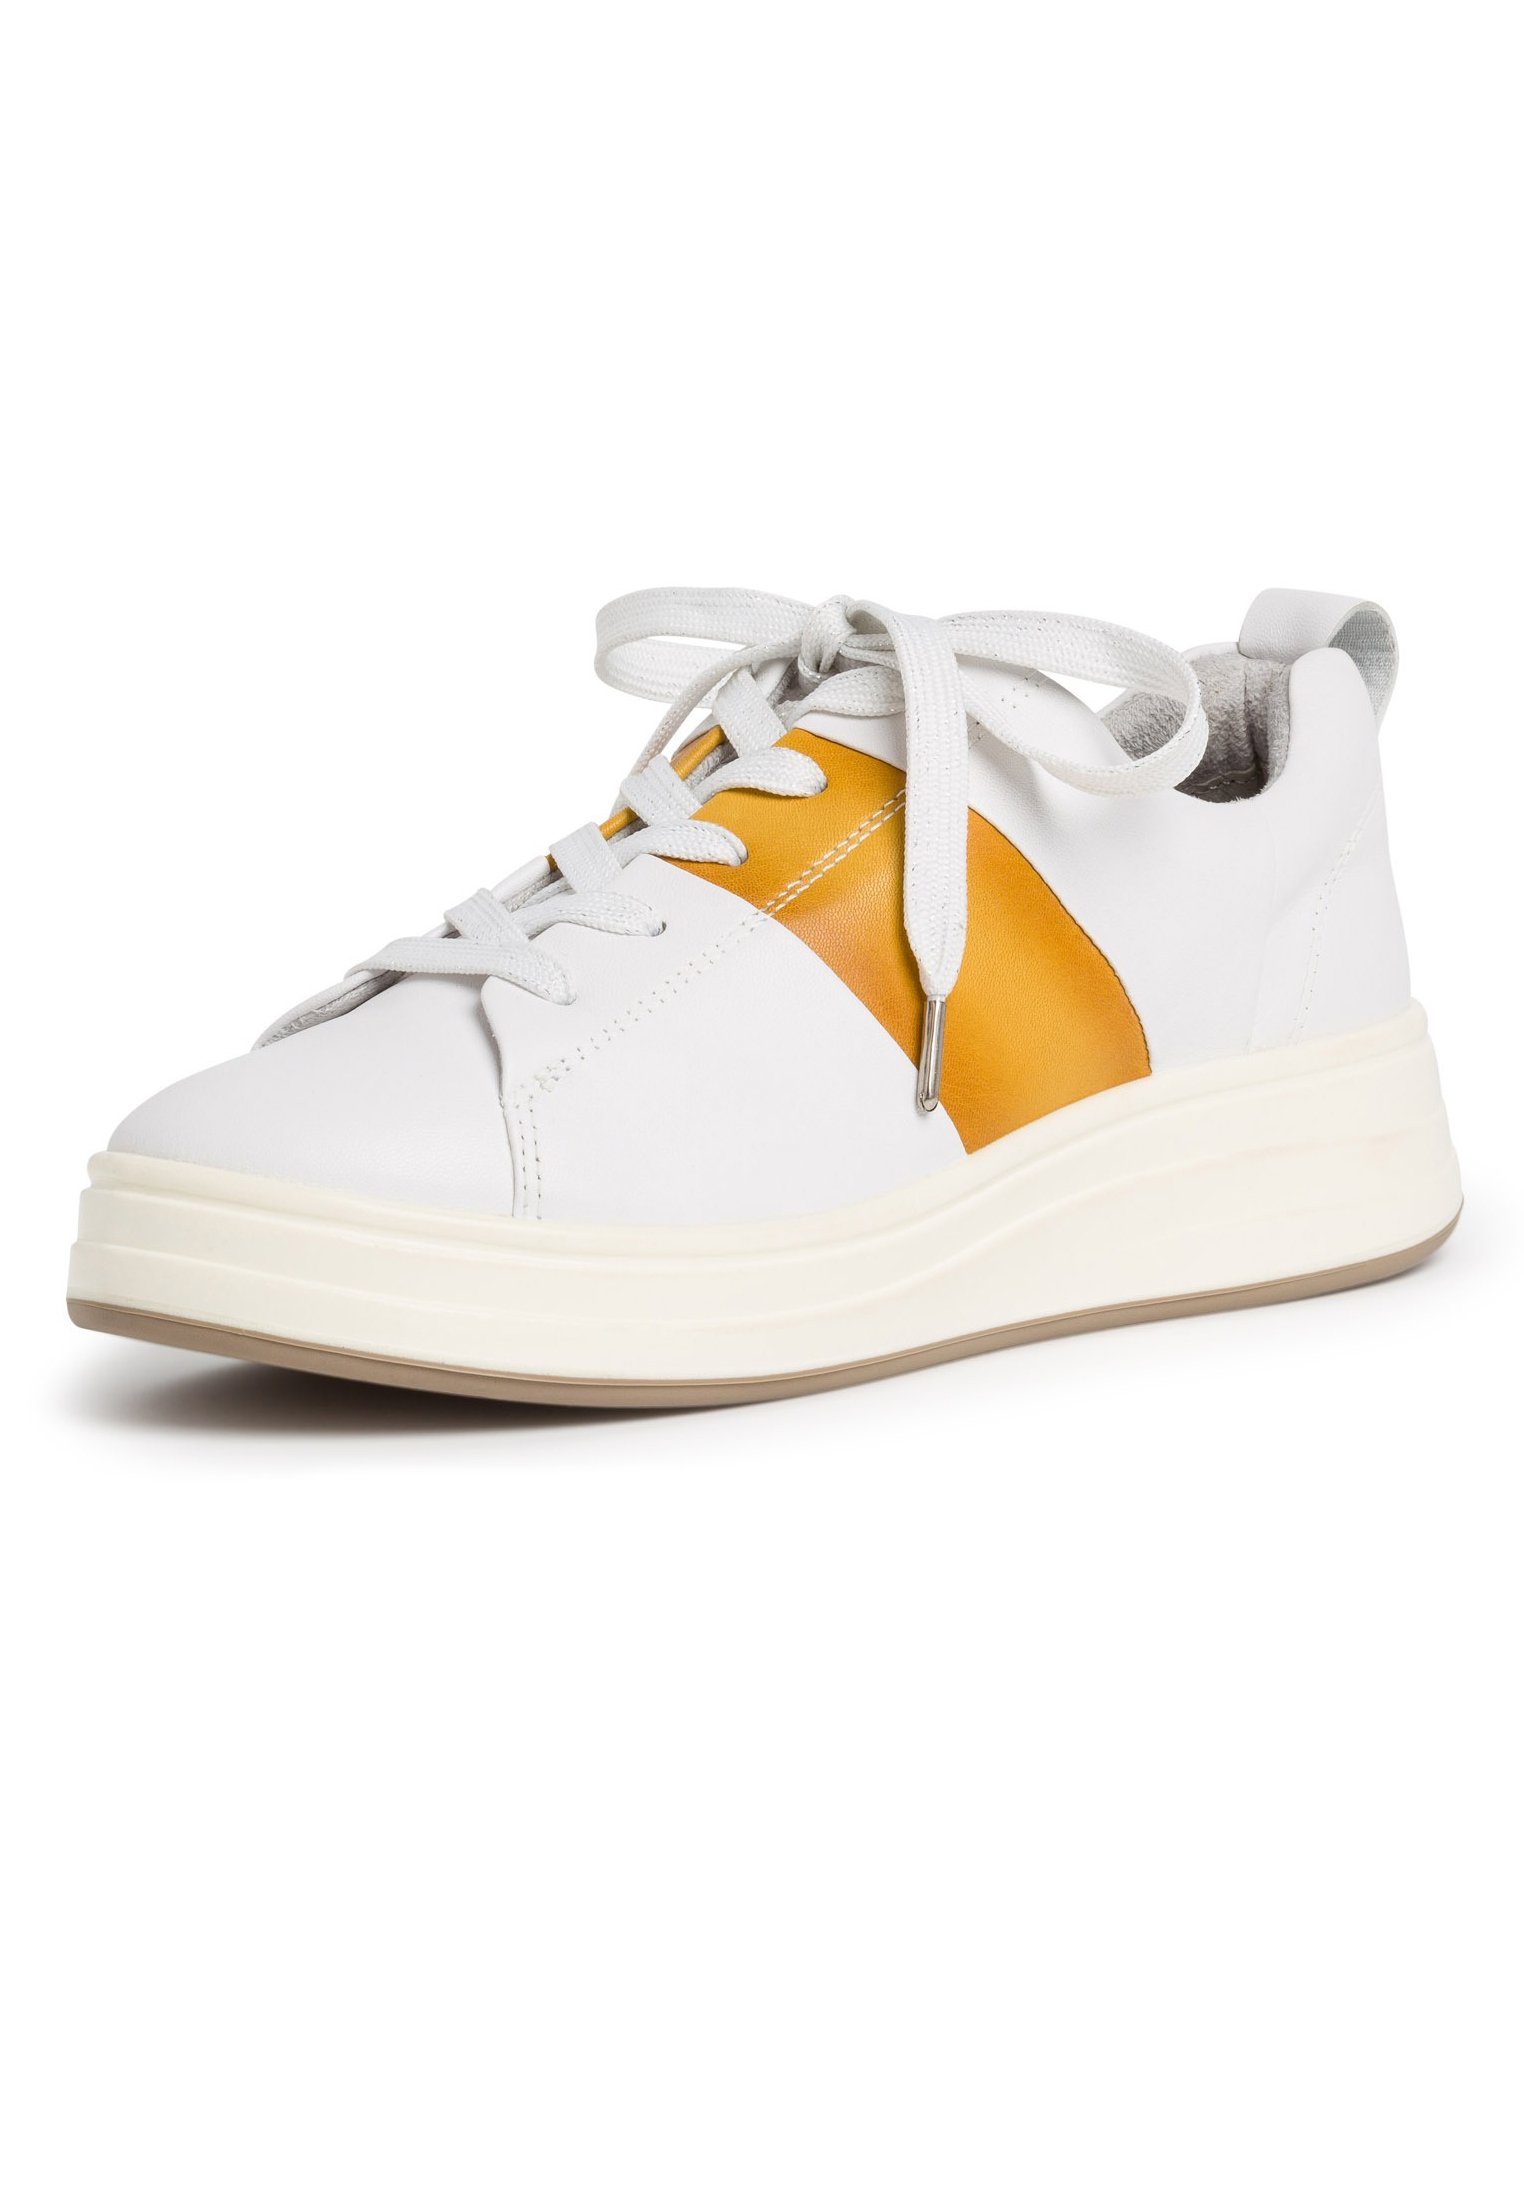 Sneaker 1-23713-24 White/Saffron Tamaris 124